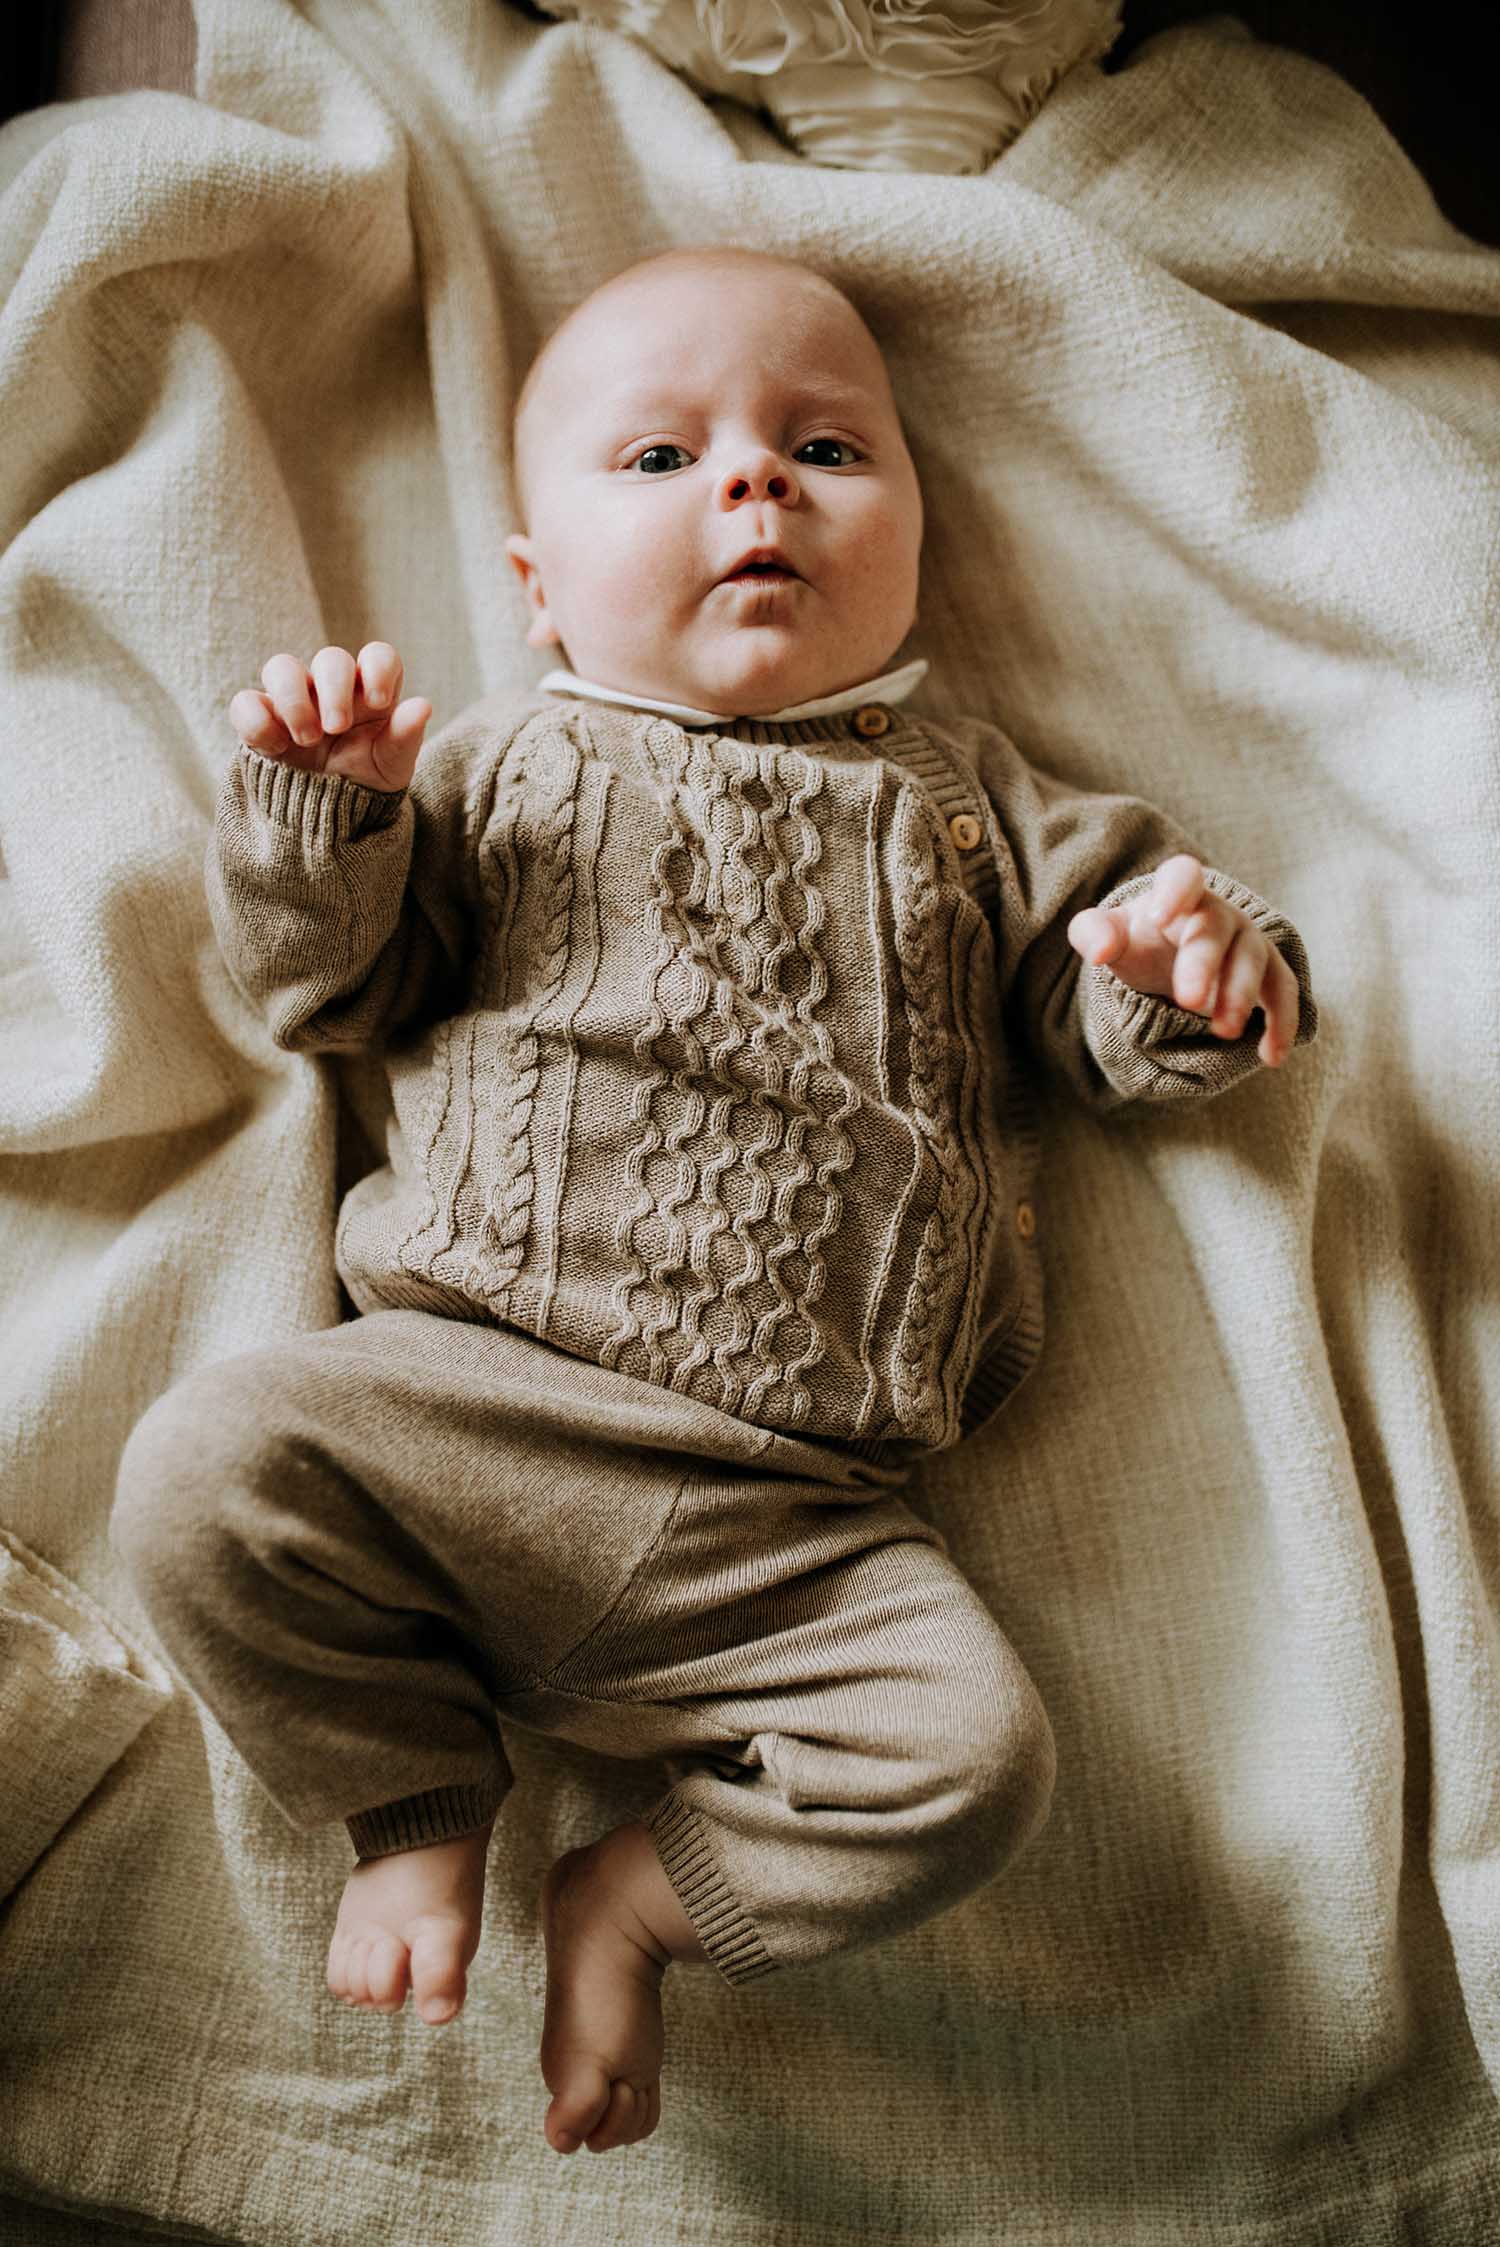 newborn baby familie fotograaf bureaucocoon Nederland Limburg zoon dochter broer zus papa mama zwangerschap babybuik